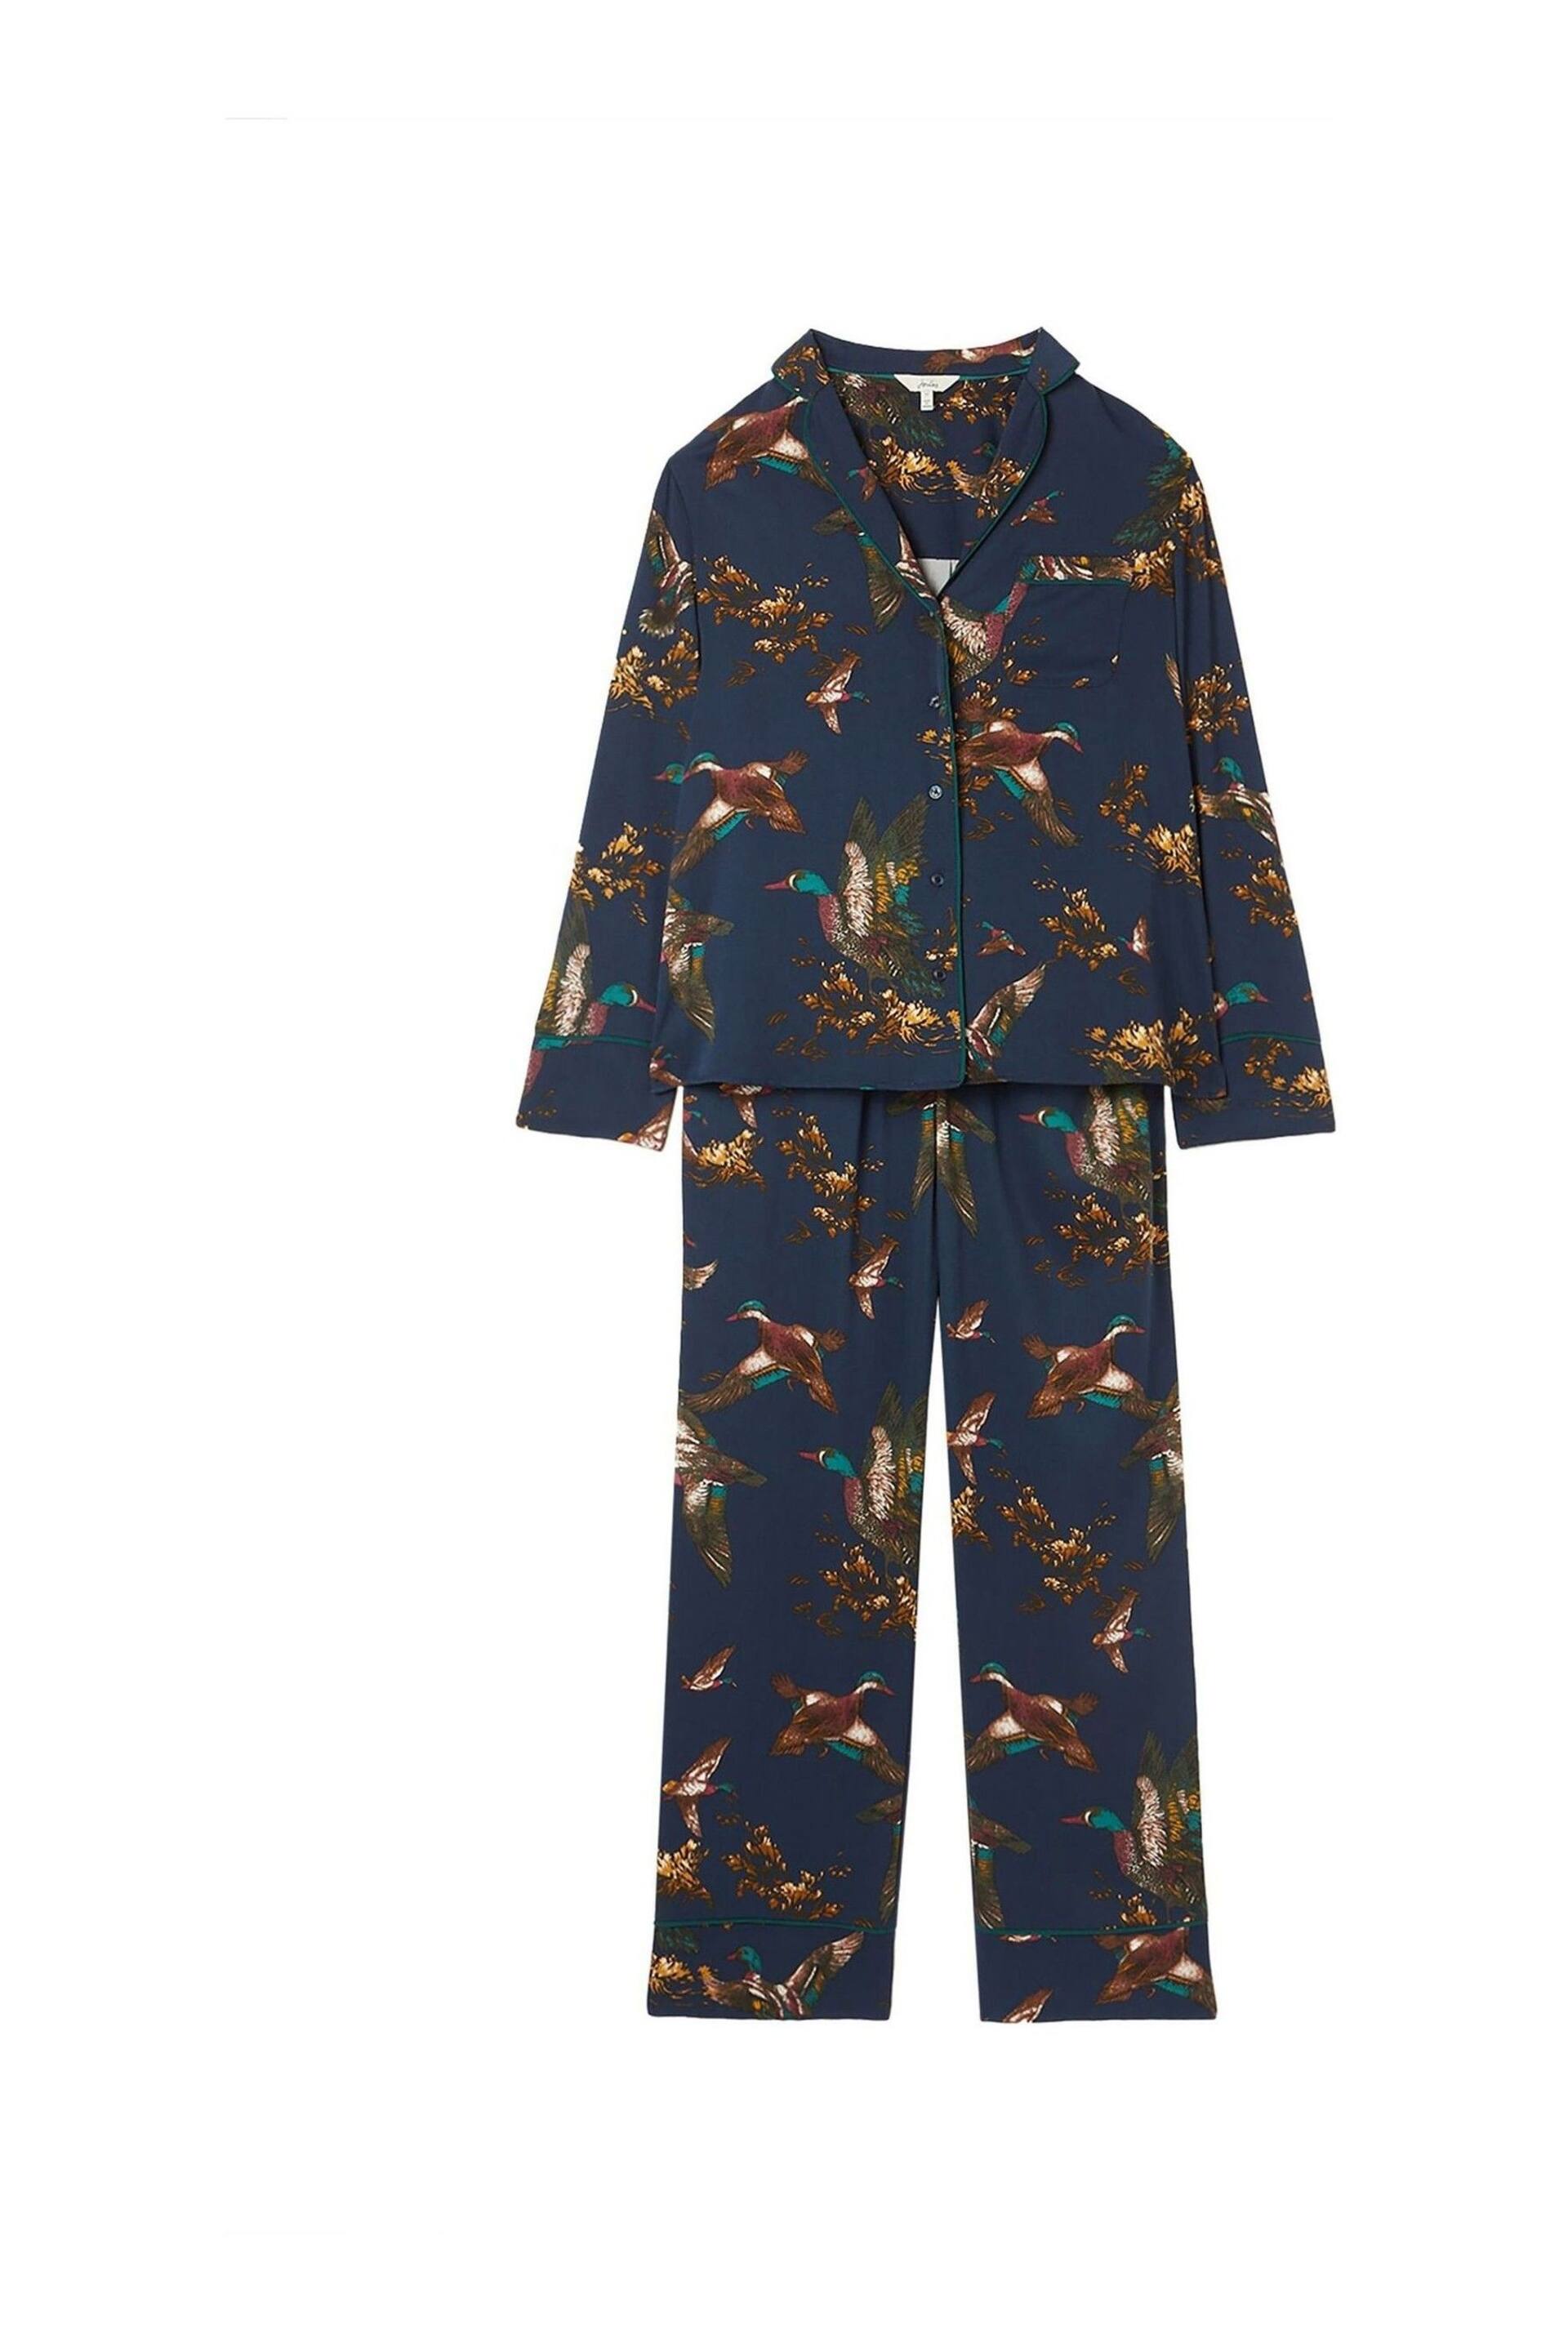 Joules Alma Navy Pyjama Set - Image 6 of 6